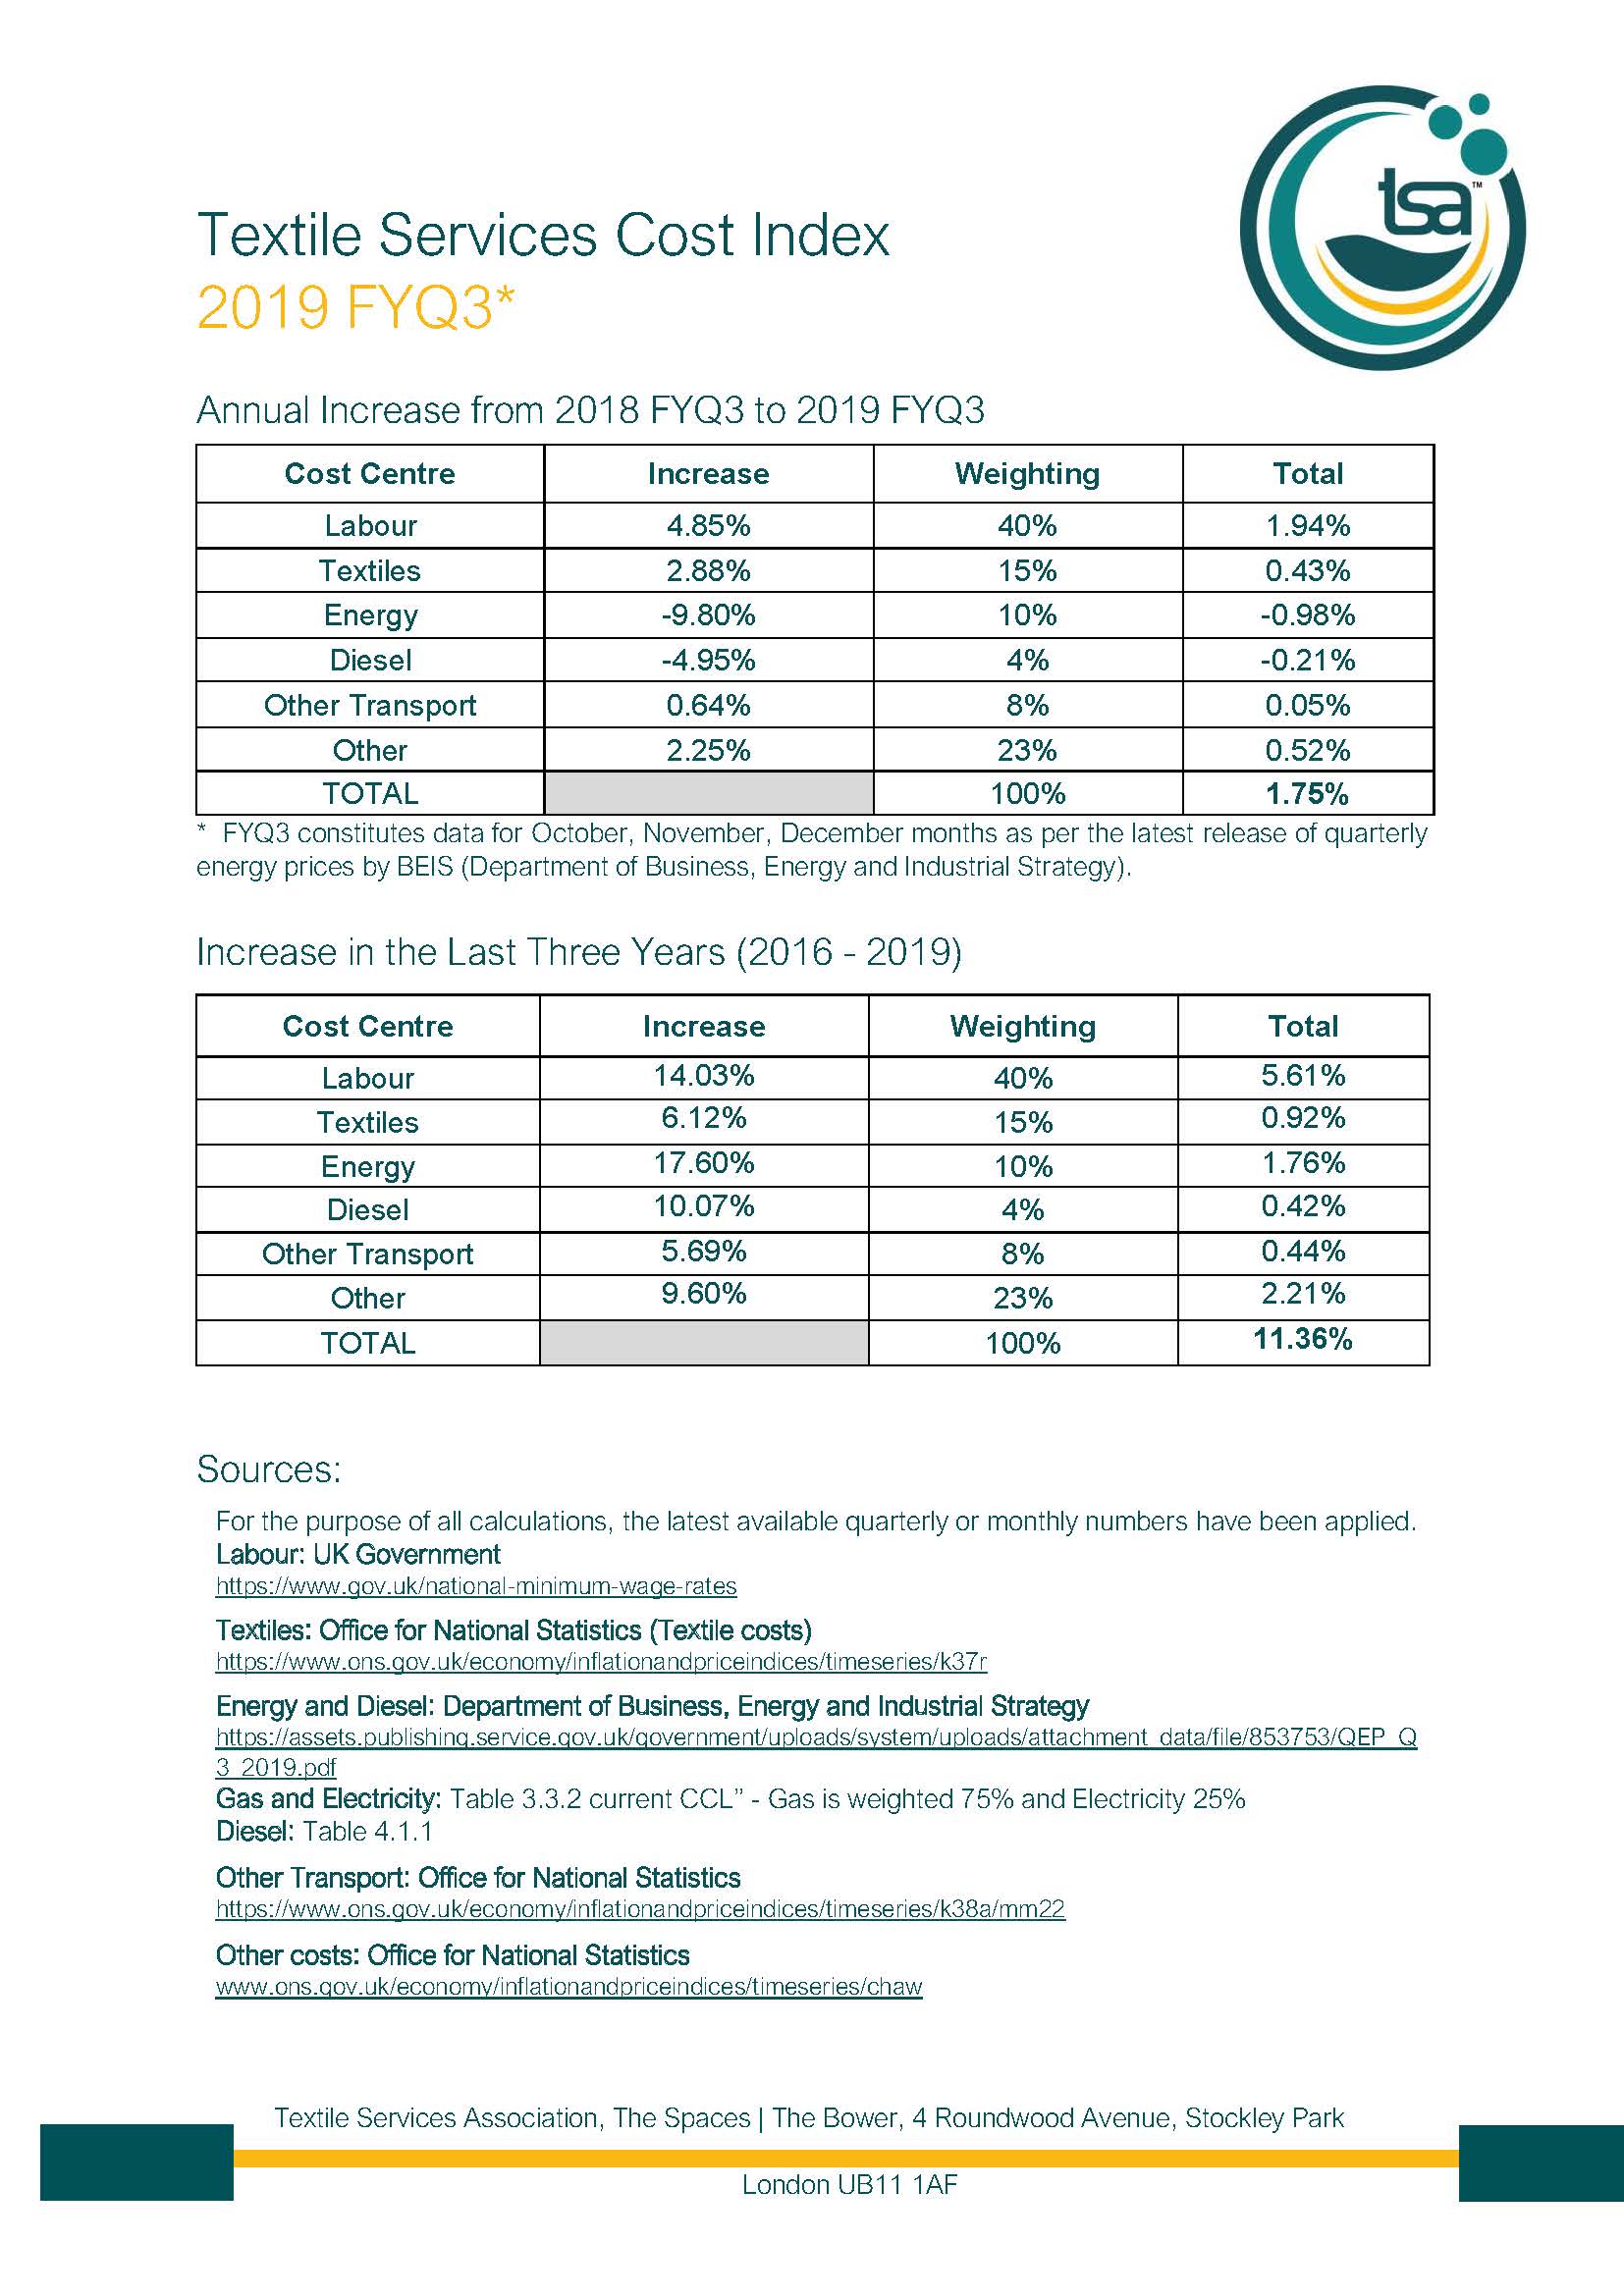 Textile Services Cost Index: 2019/2020 FYQ3